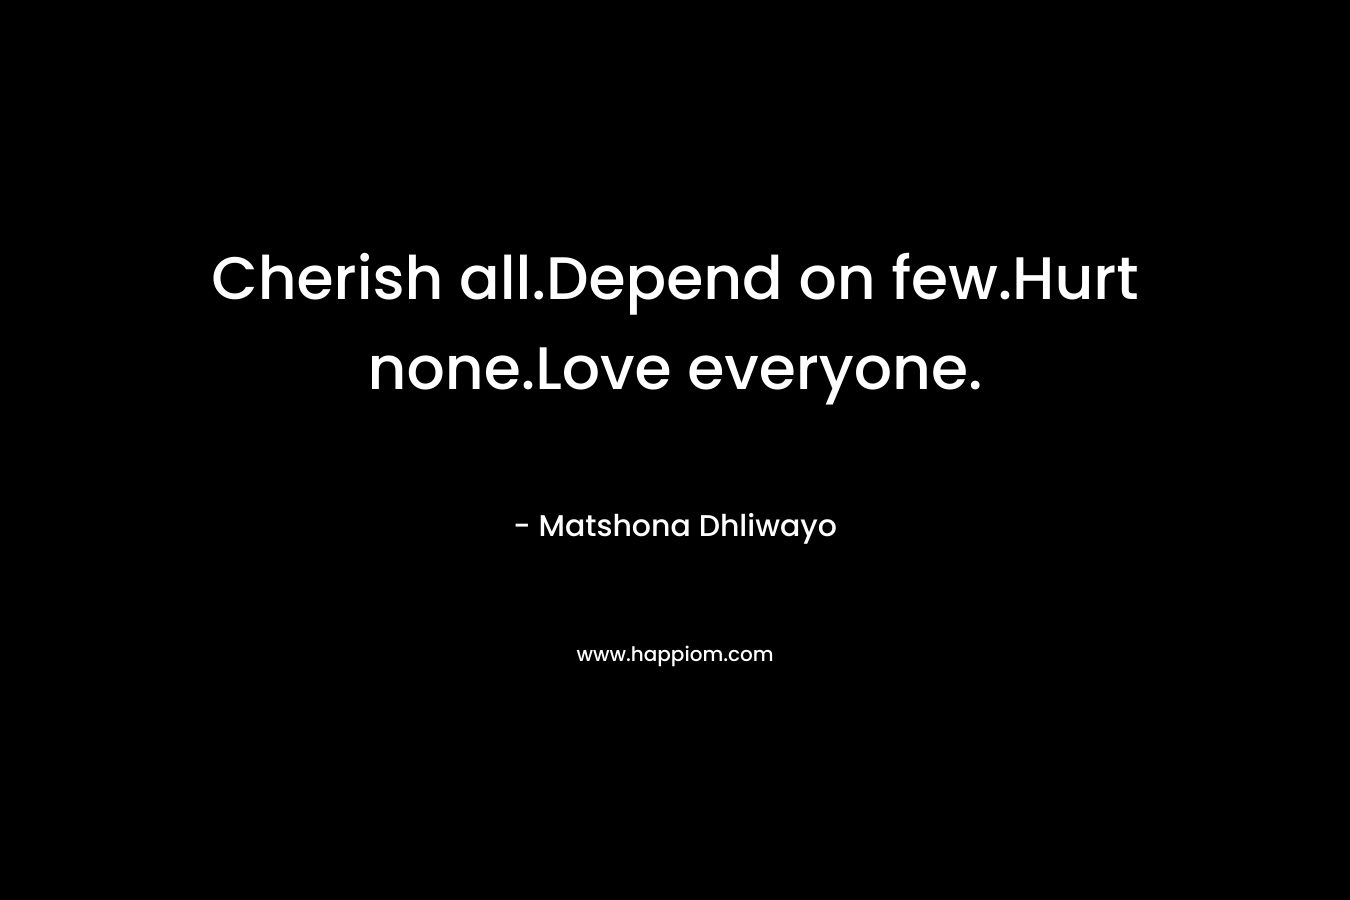 Cherish all.Depend on few.Hurt none.Love everyone.